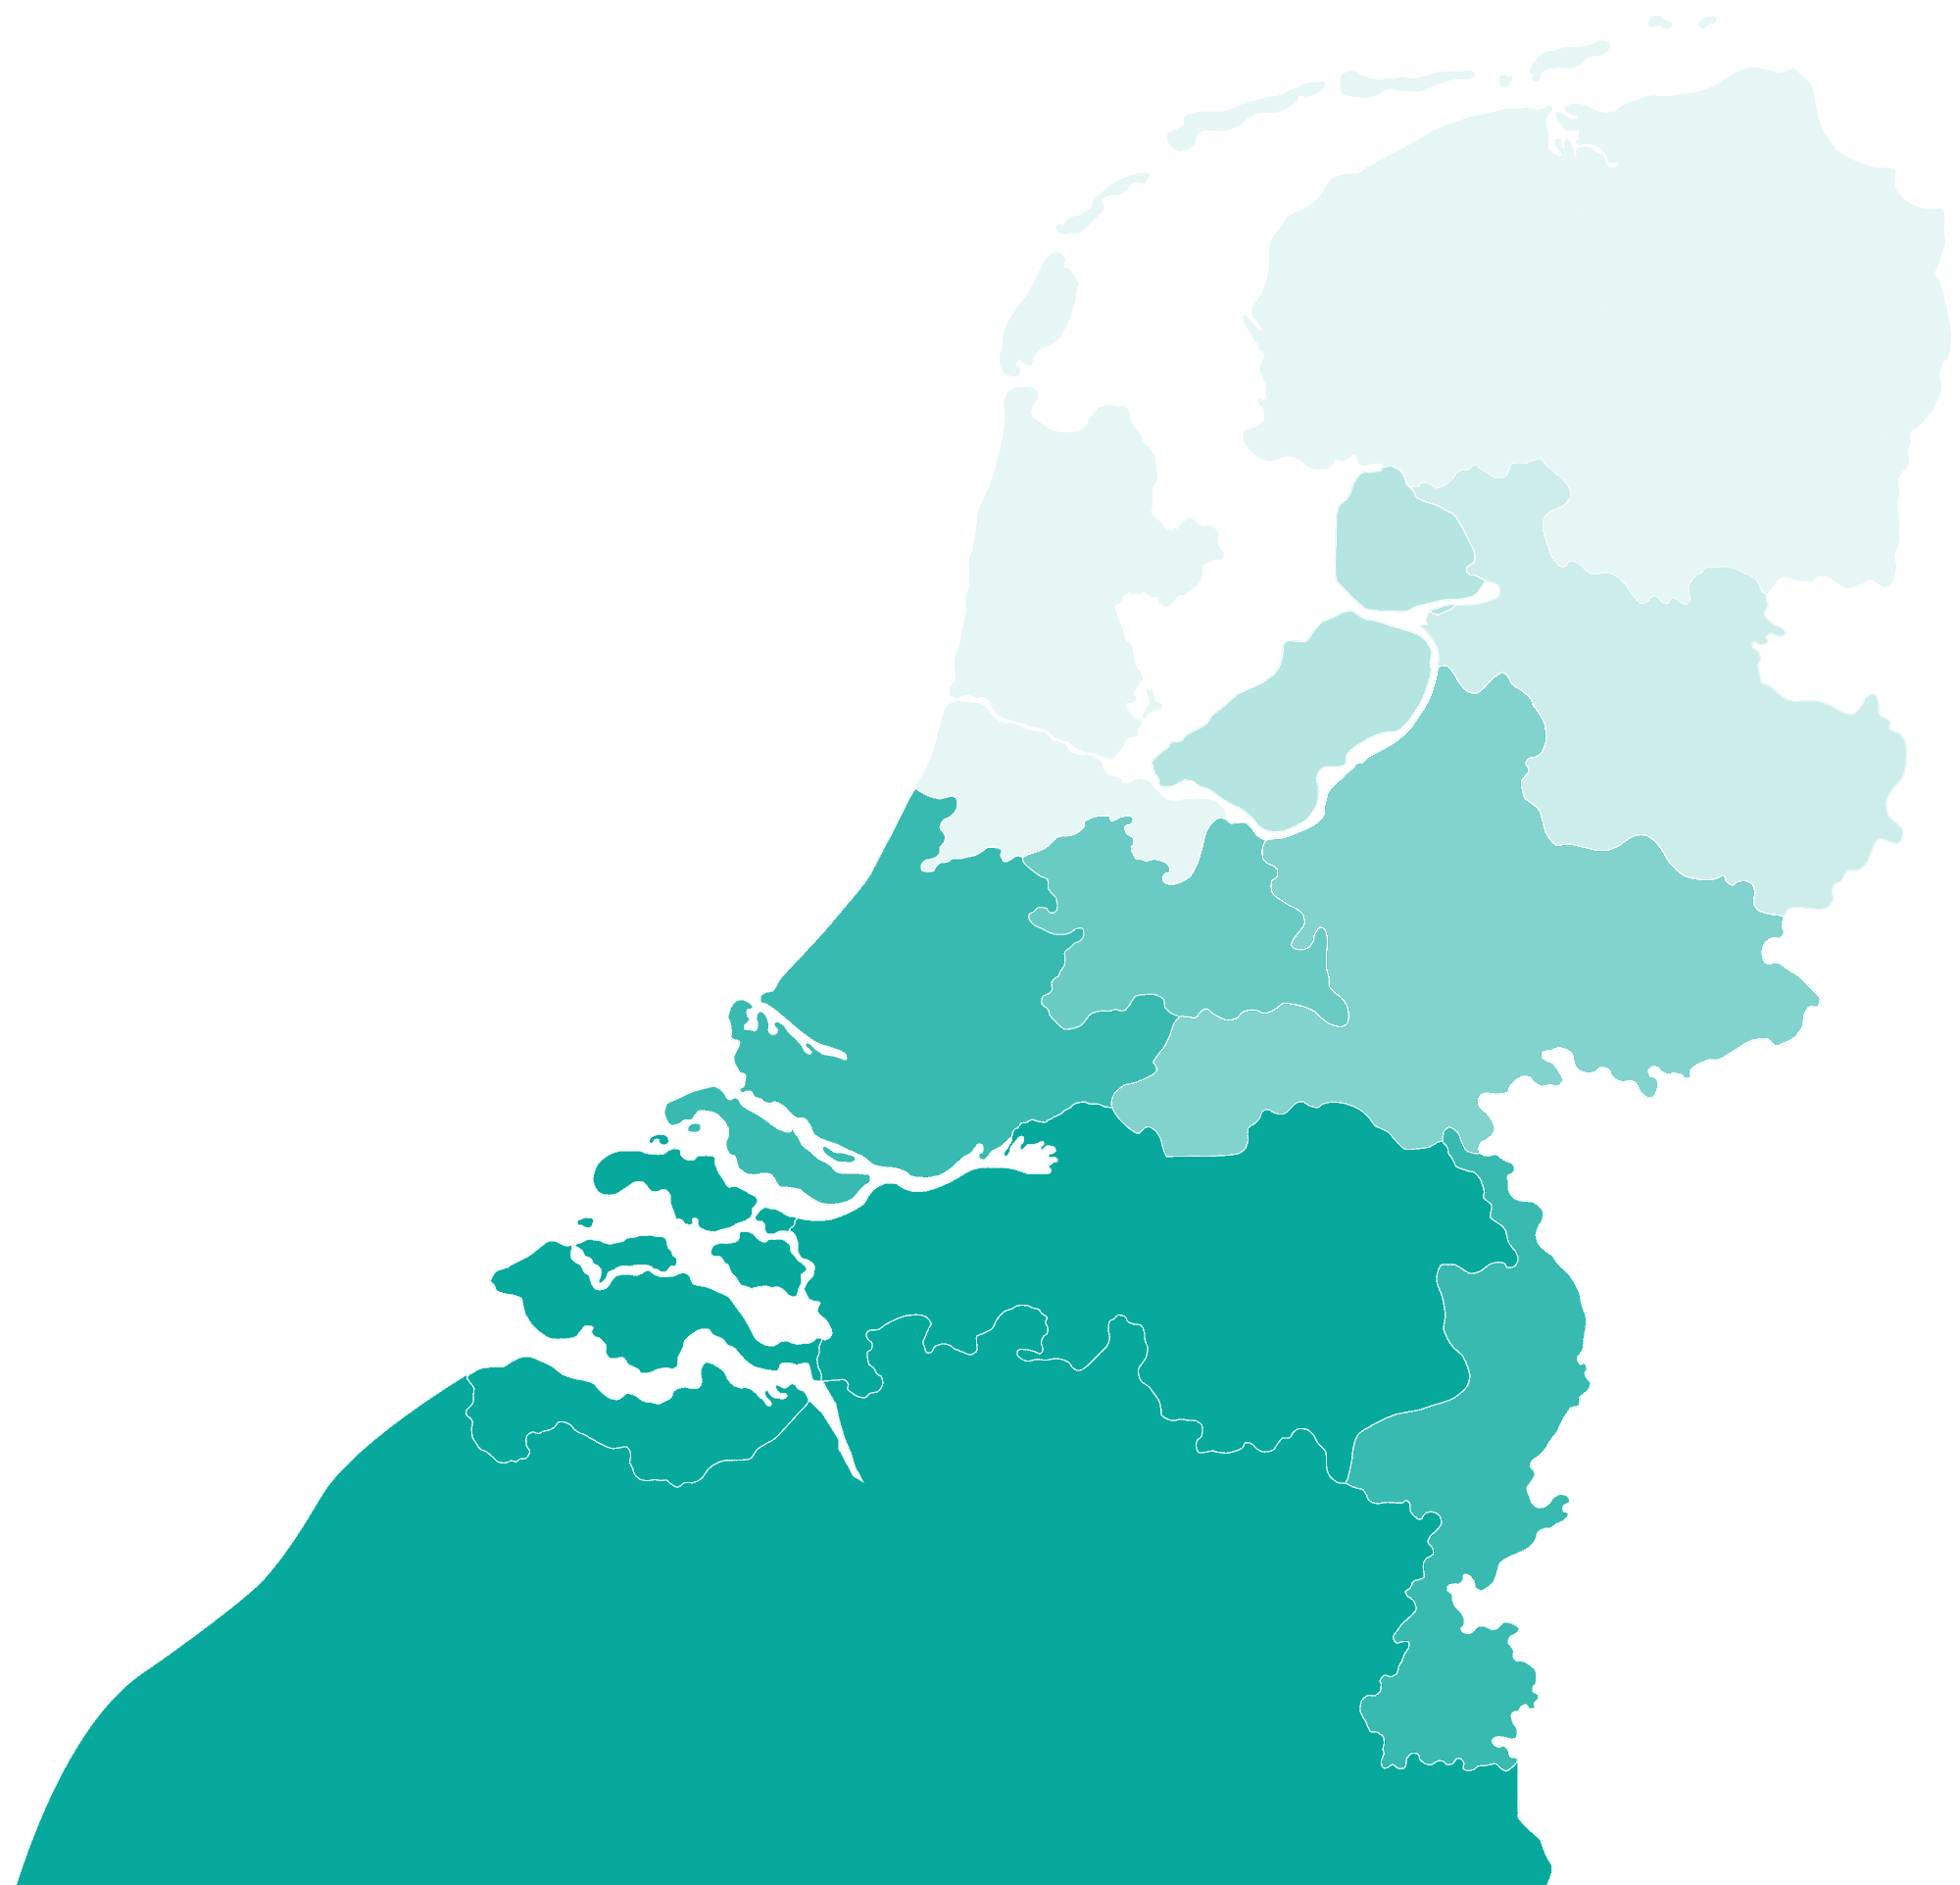 flexstay personeelshuisvesting werkgebied nederland belgie kaart